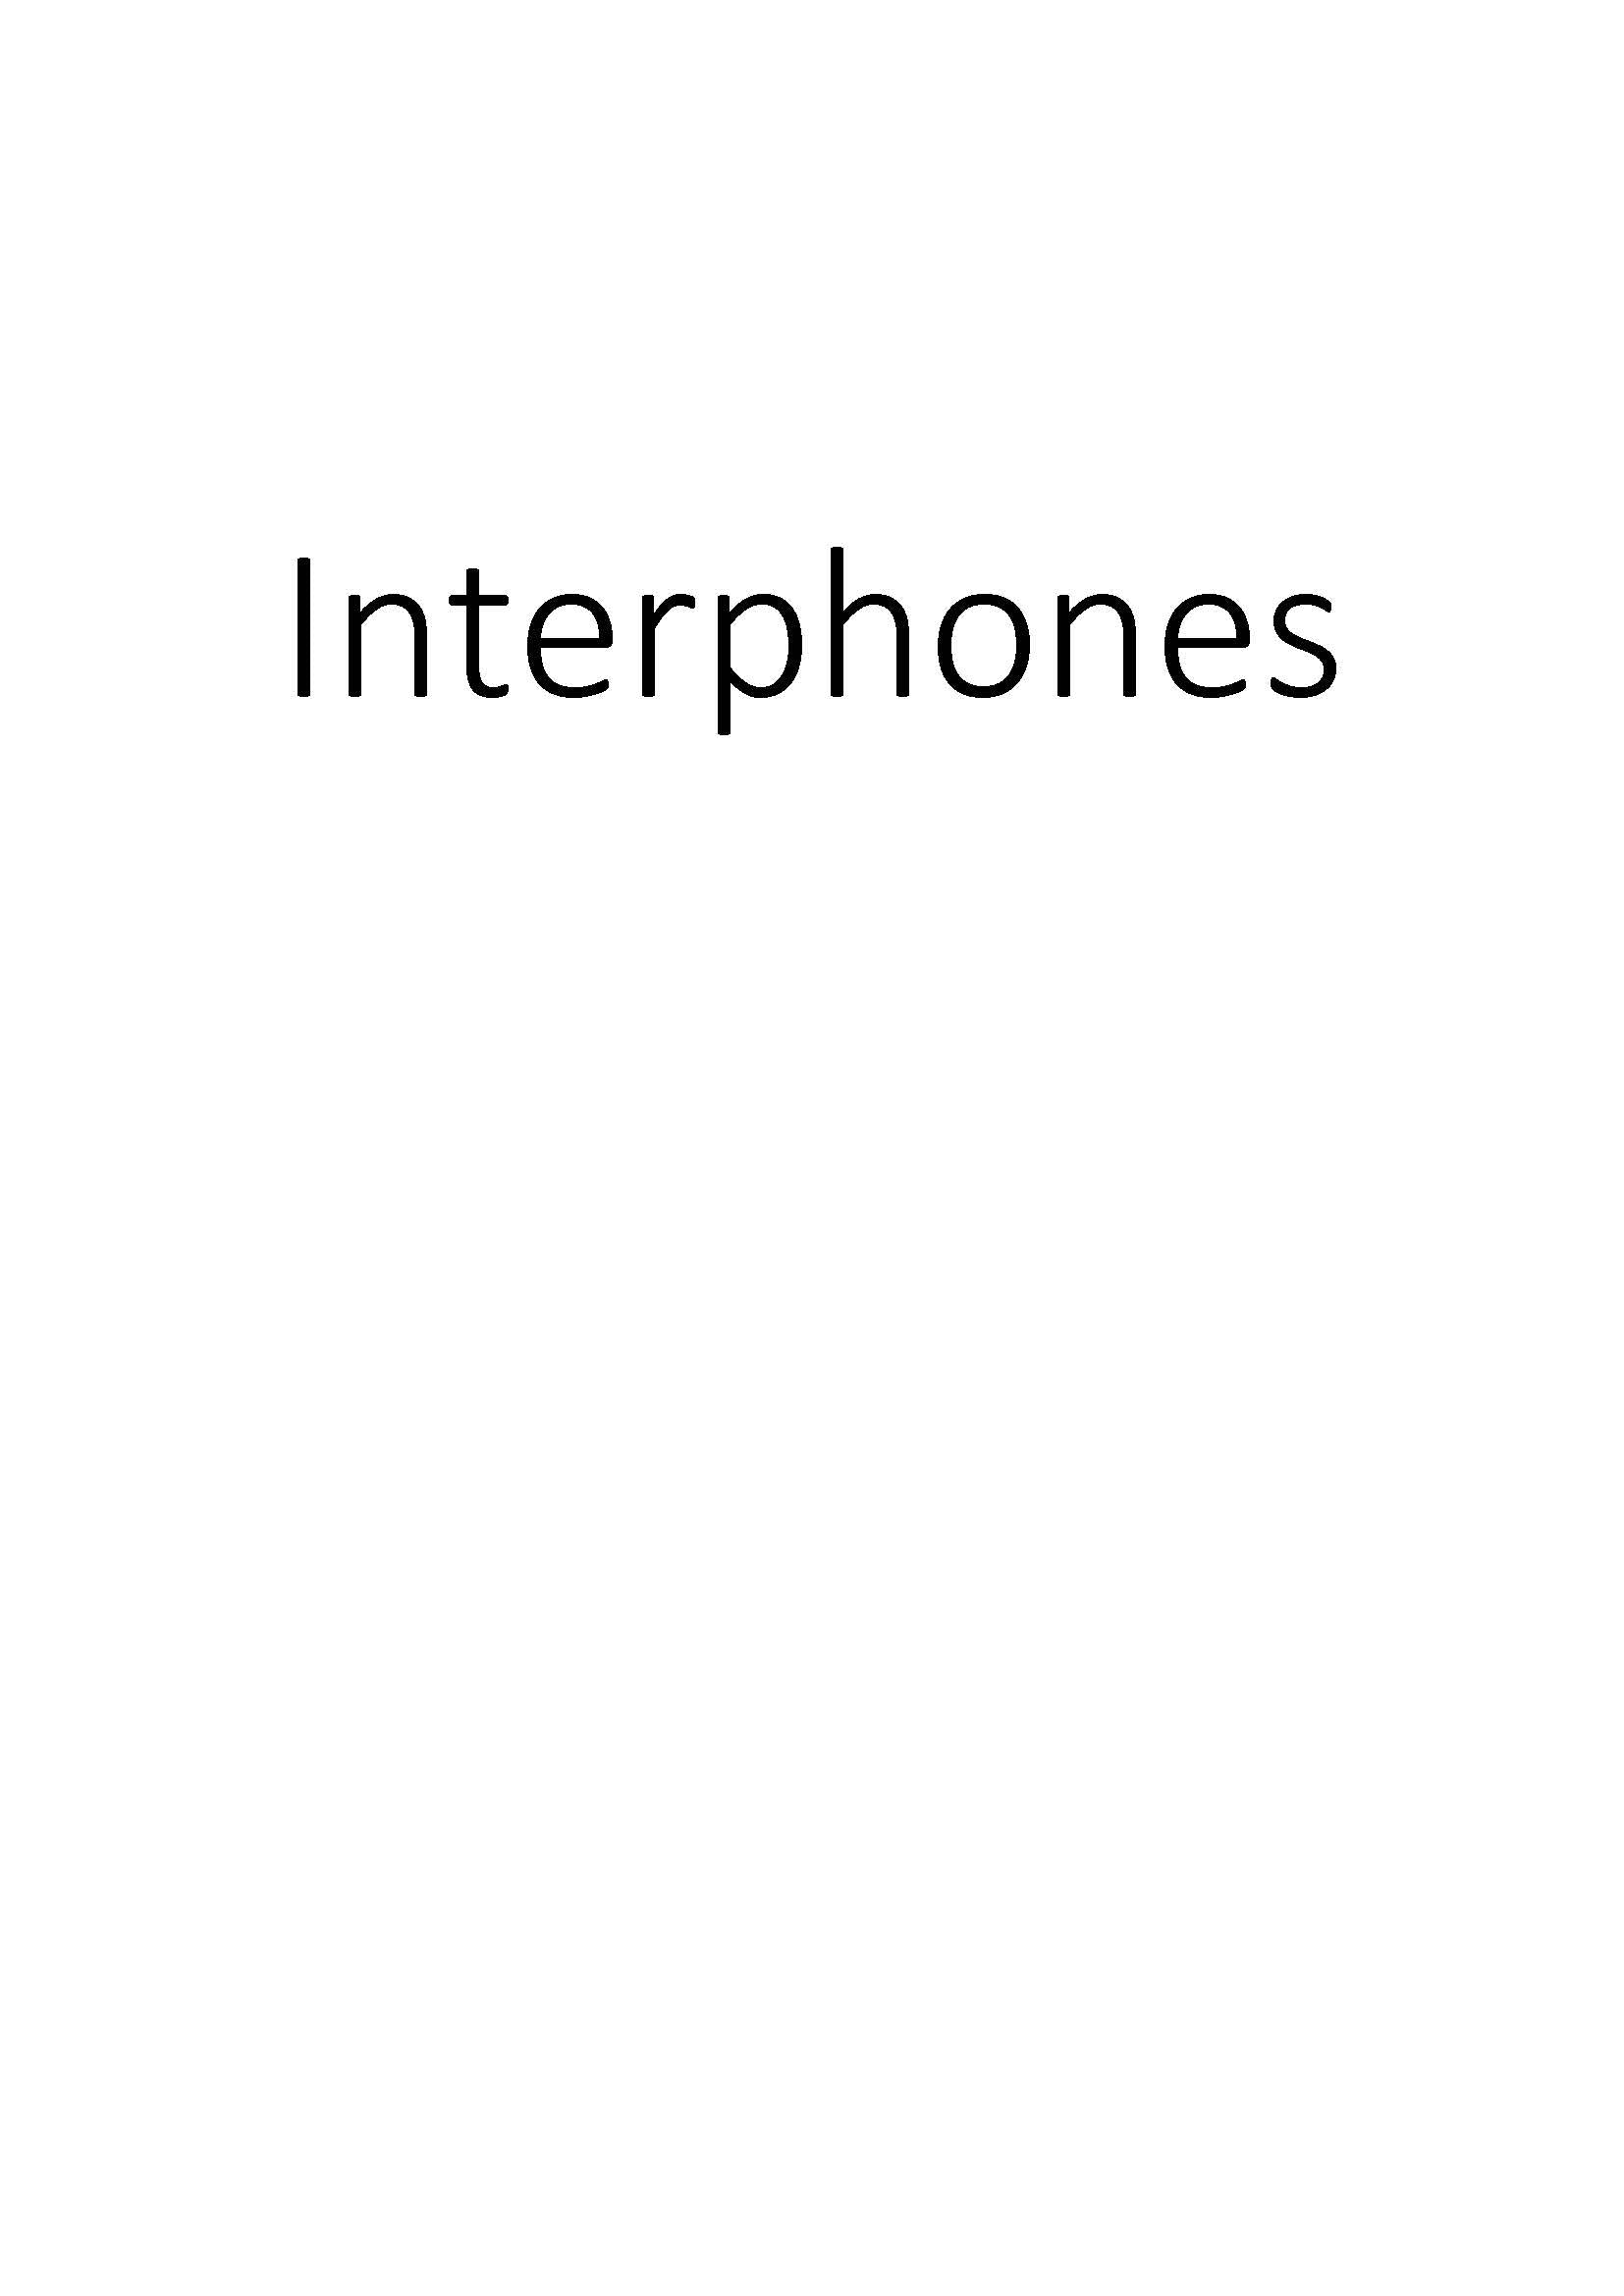 Interphones clicktofournisseur.com